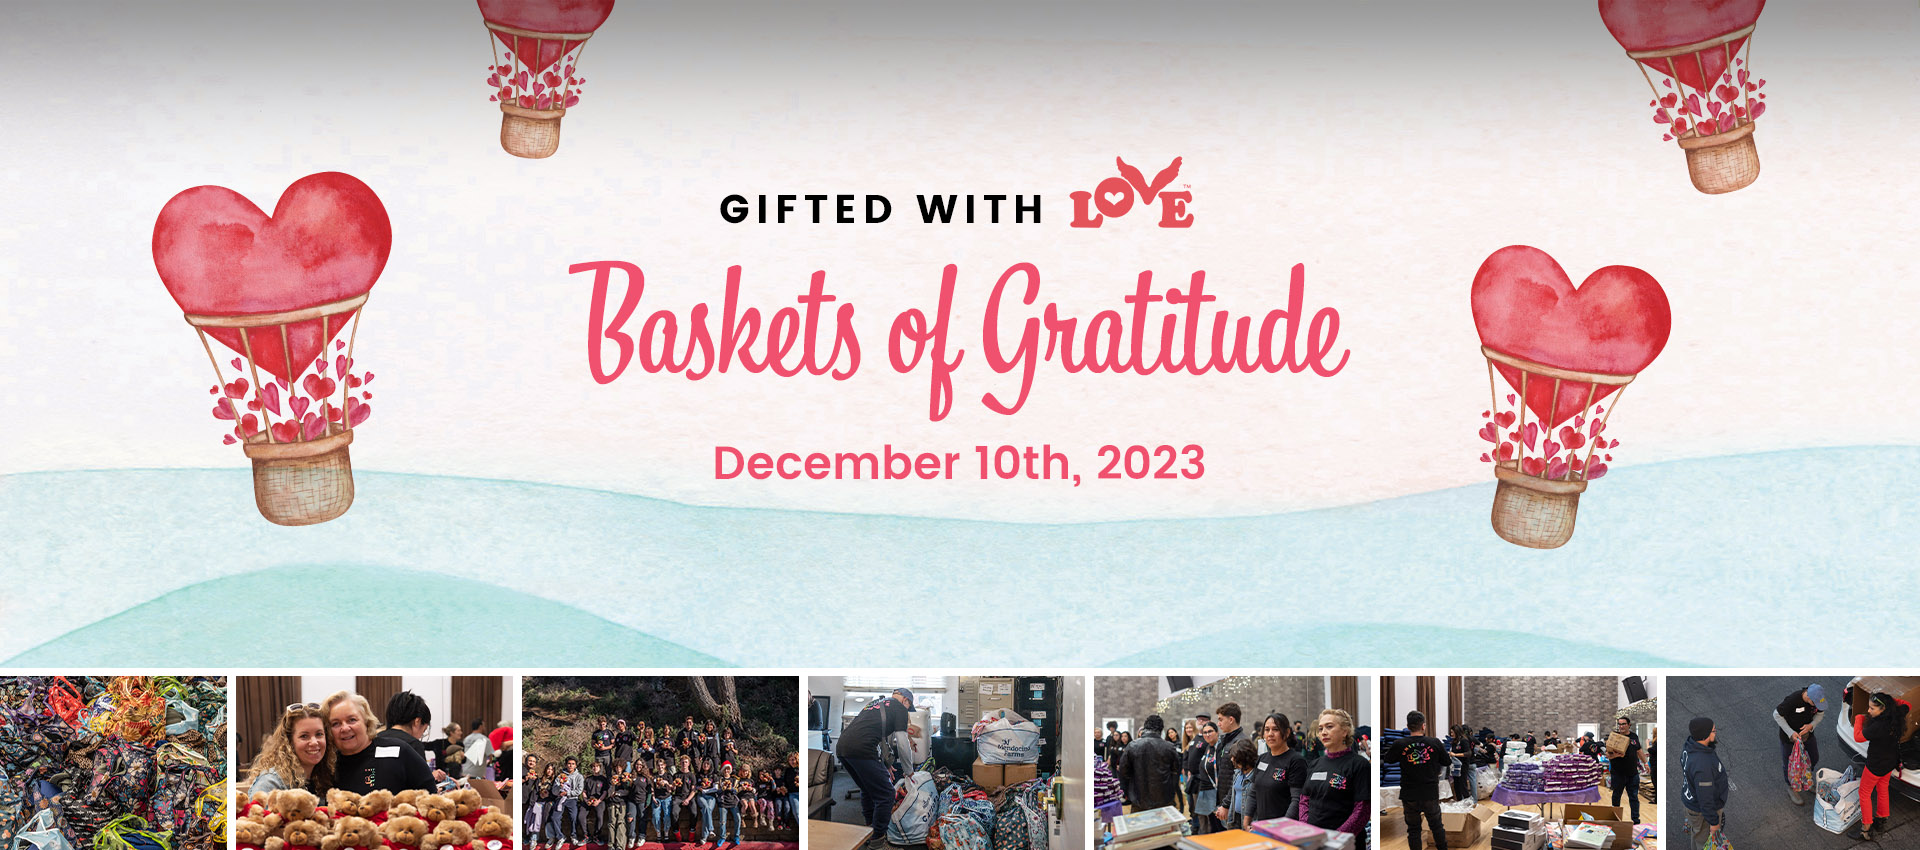 7th Annual Baskets of Gratitude